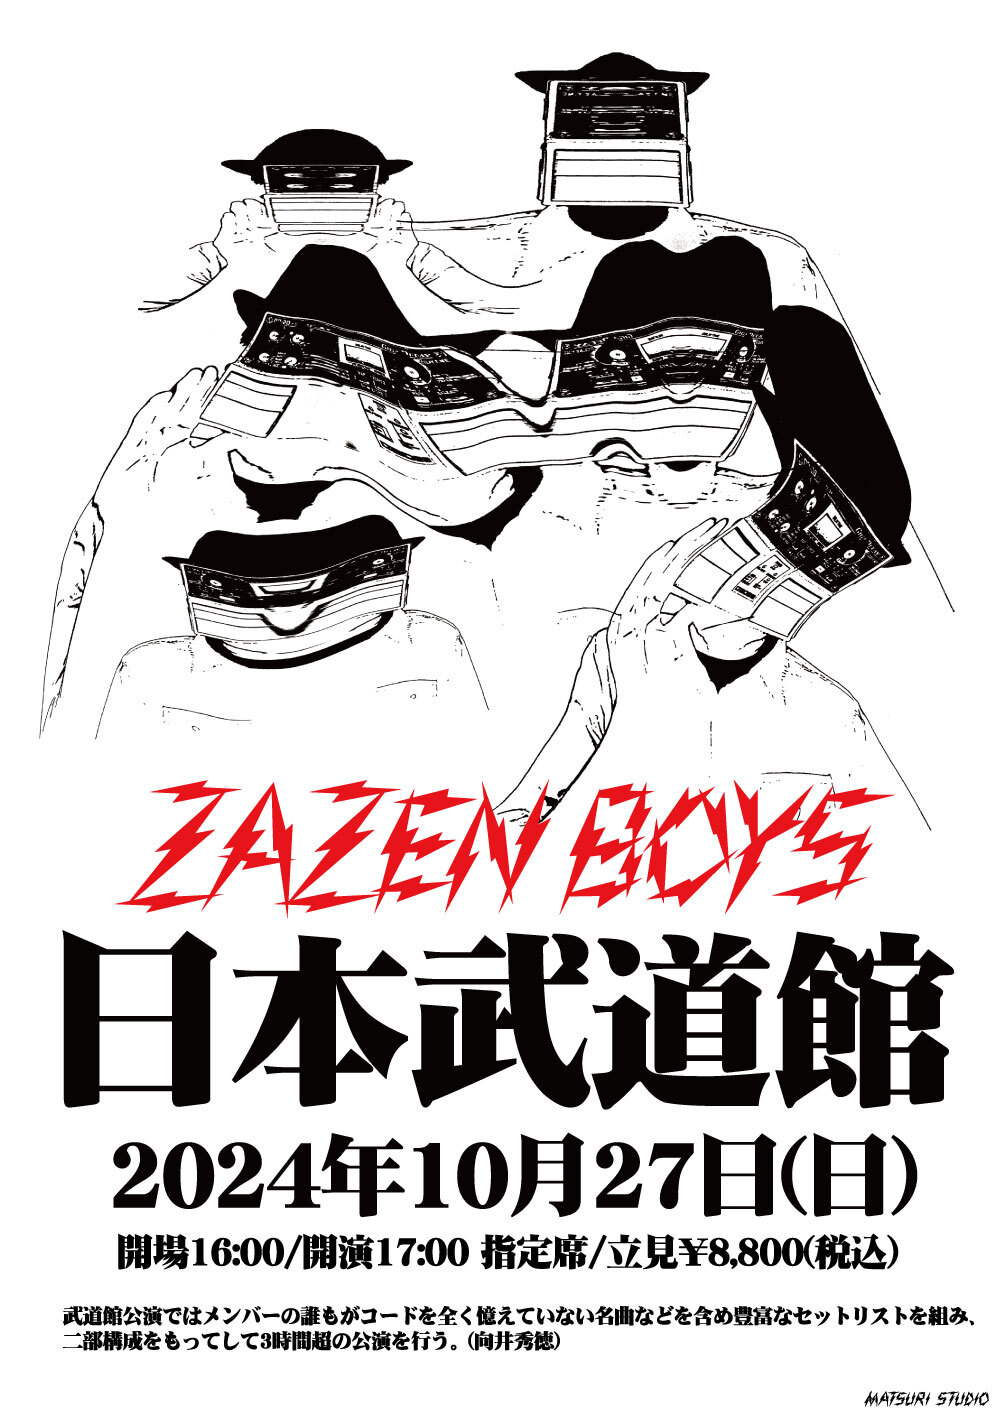 『ZAZEN BOYS MATSURI SESSION』